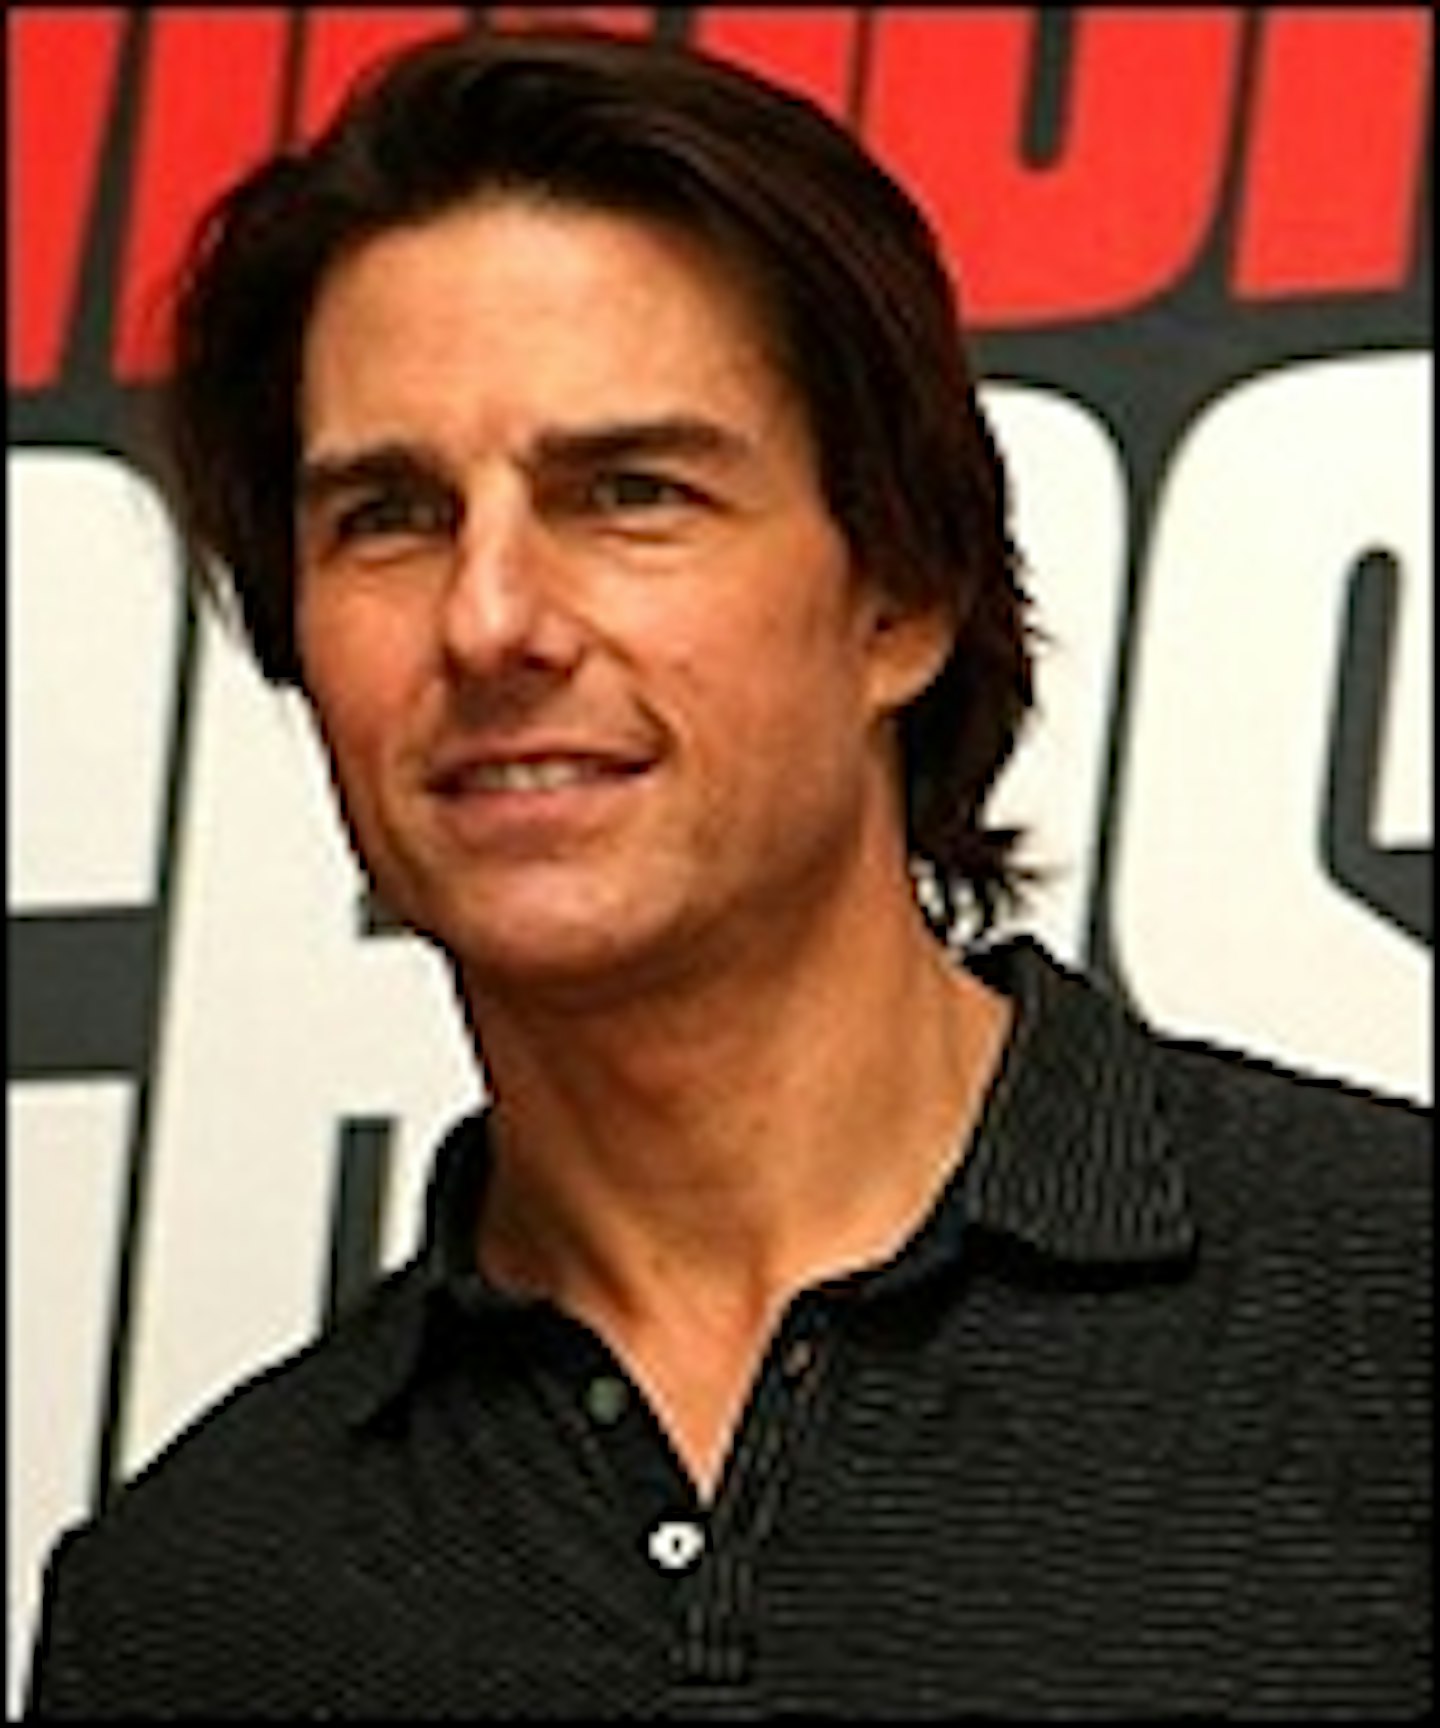 Tom Cruise As Jack Reacher?